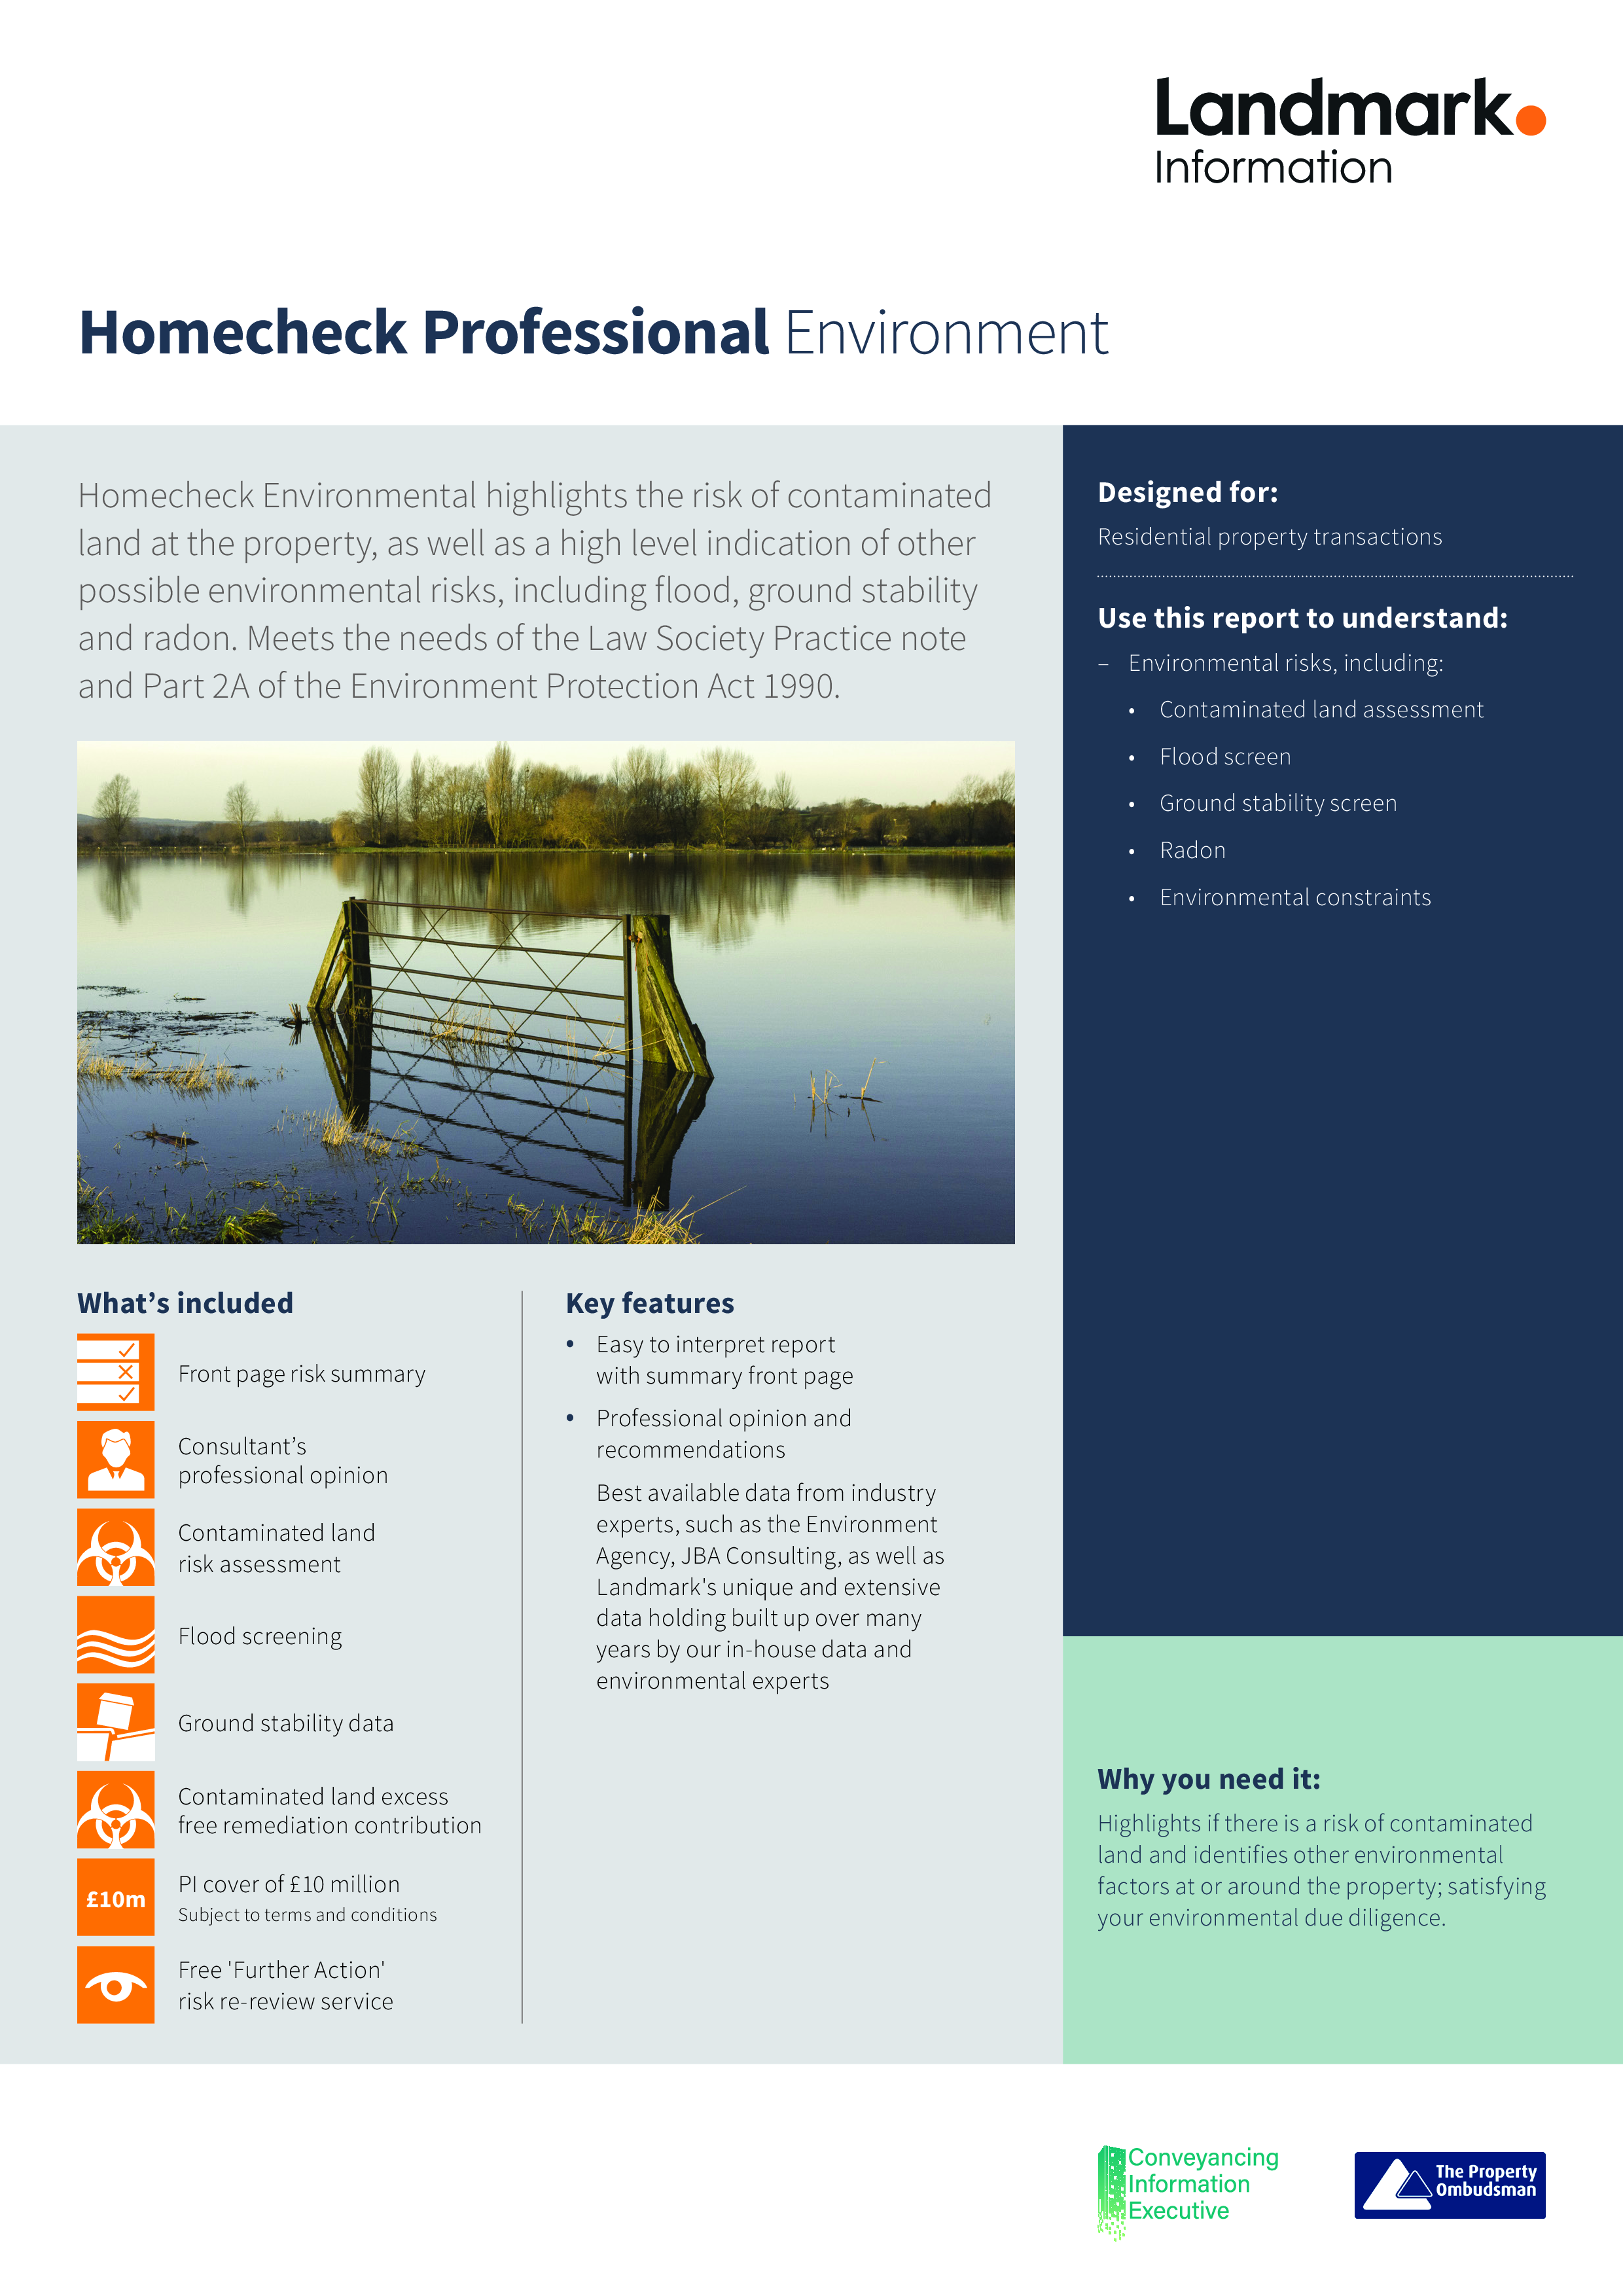 Landmark Homecheck Pro and Landmark Planning and Mining and Subsidence Image